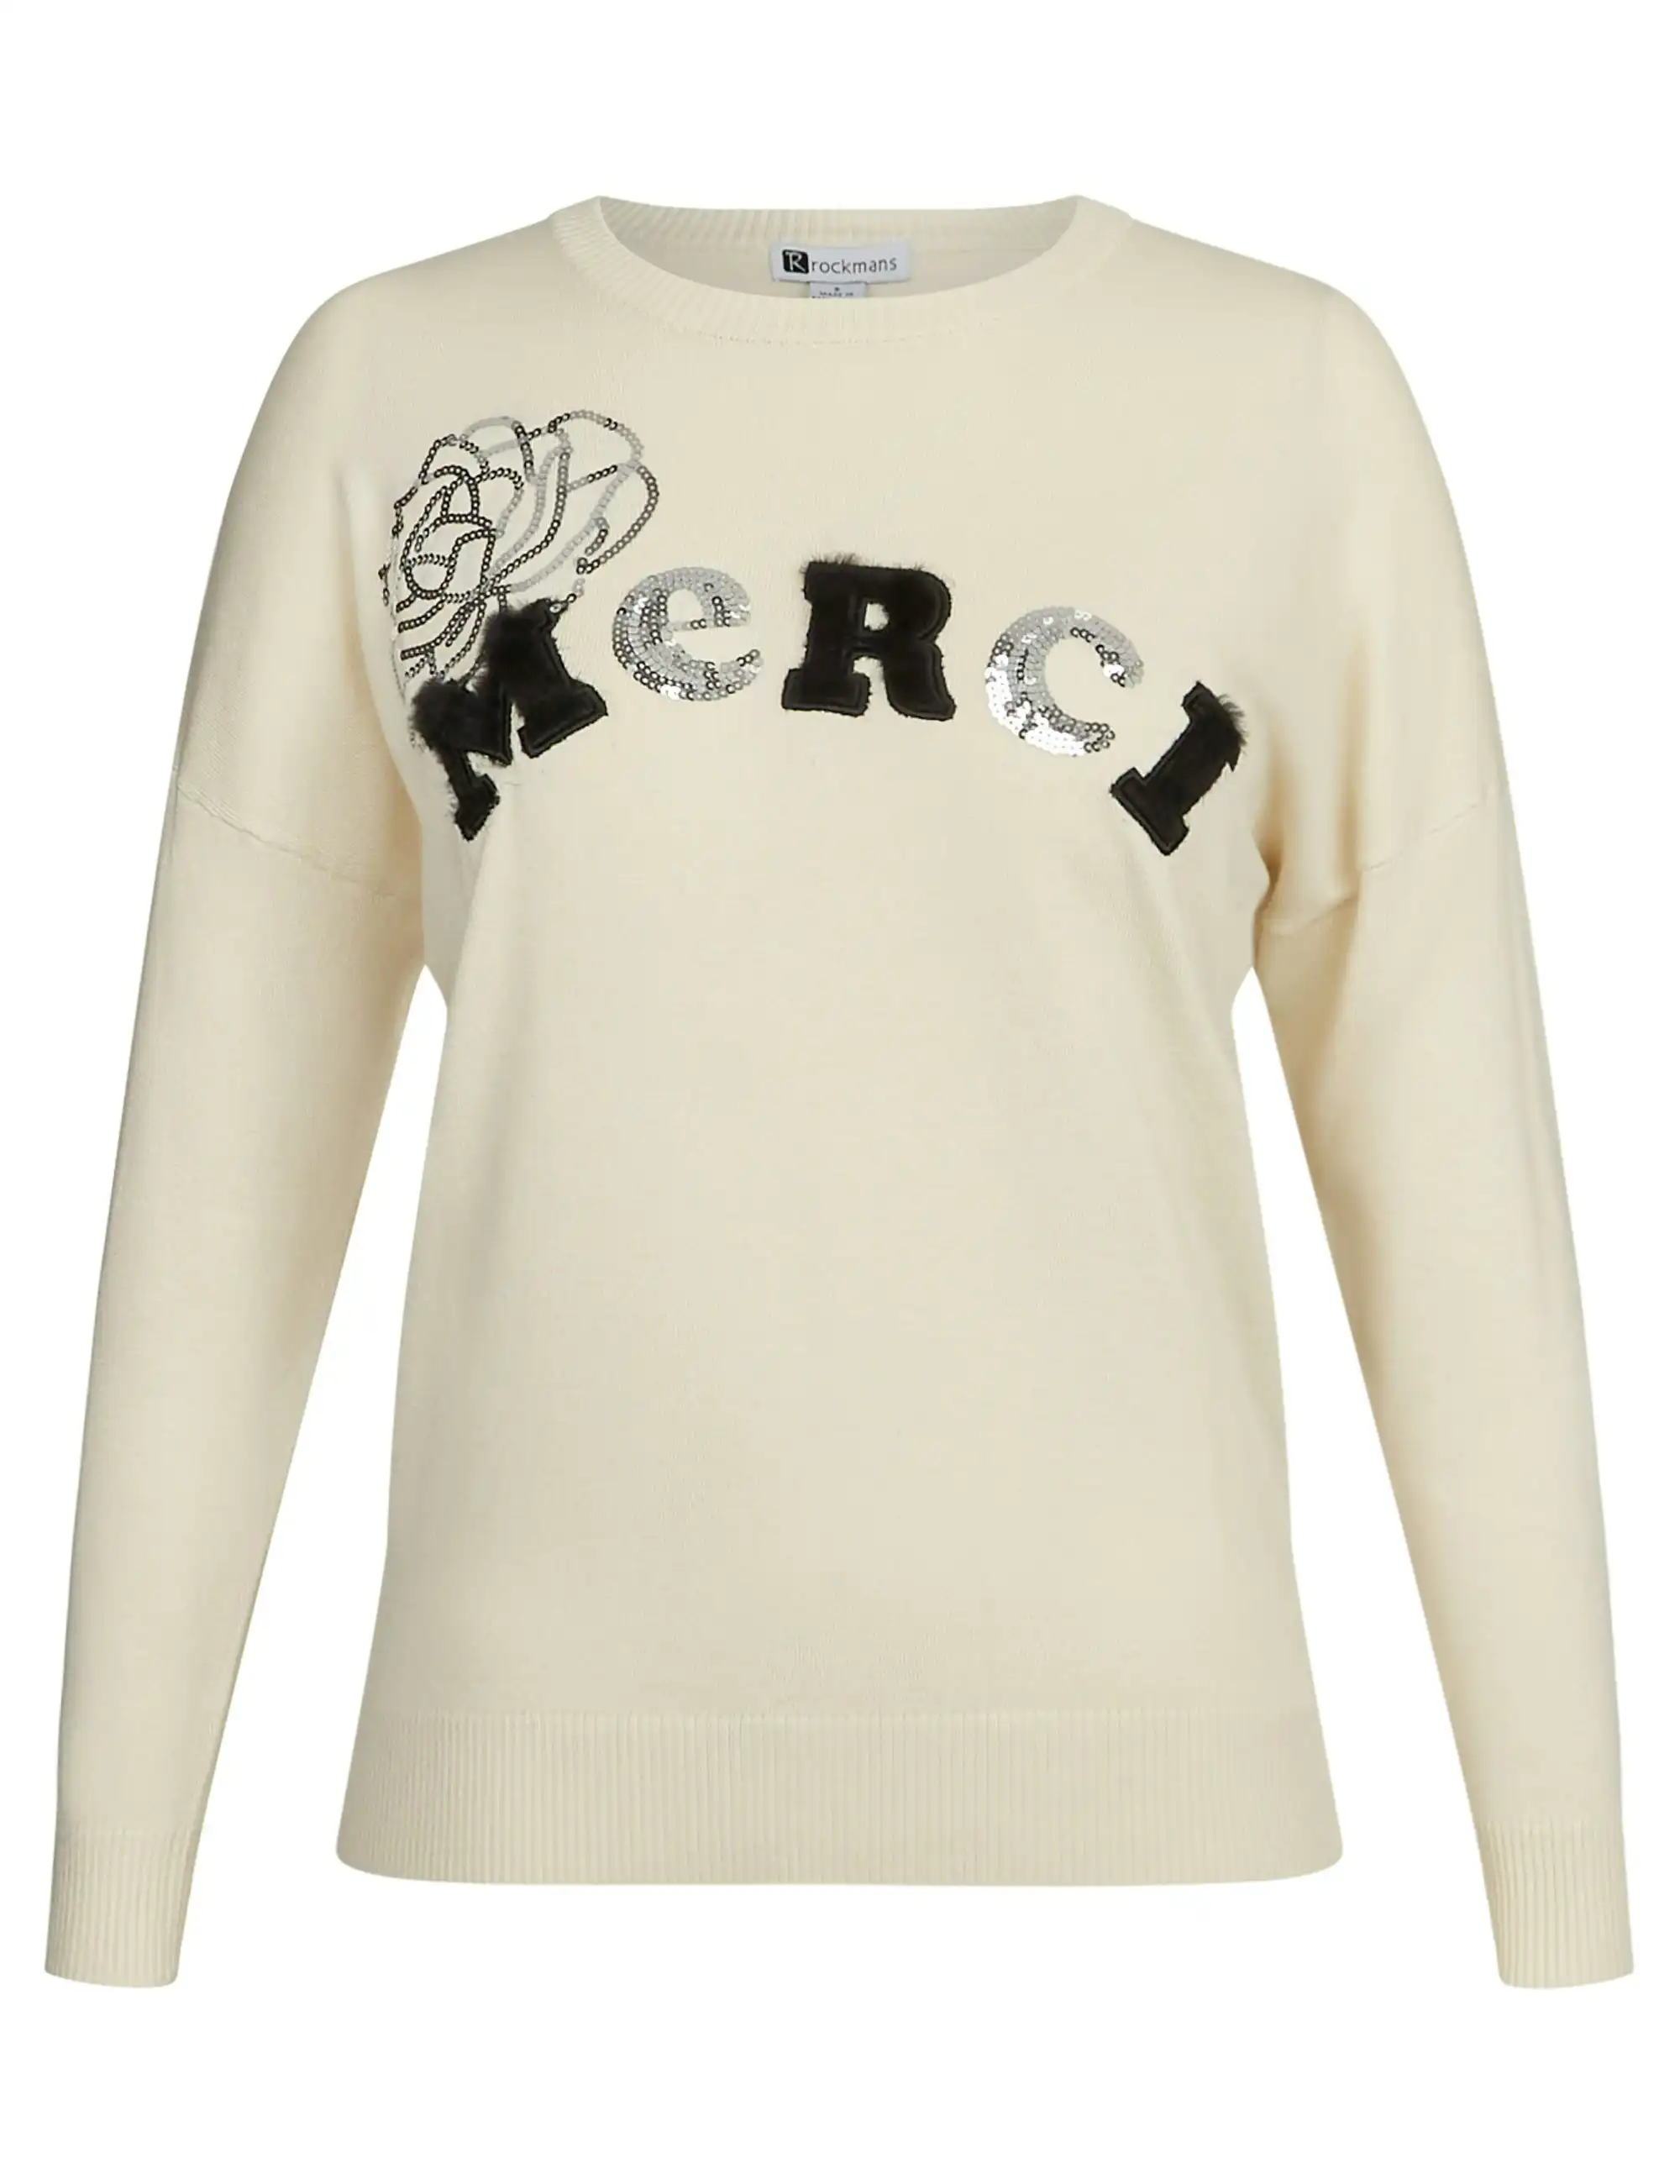 Rockmans Long Sleeve Faux Fur Sequin Femme Knitwear Top (Cream)